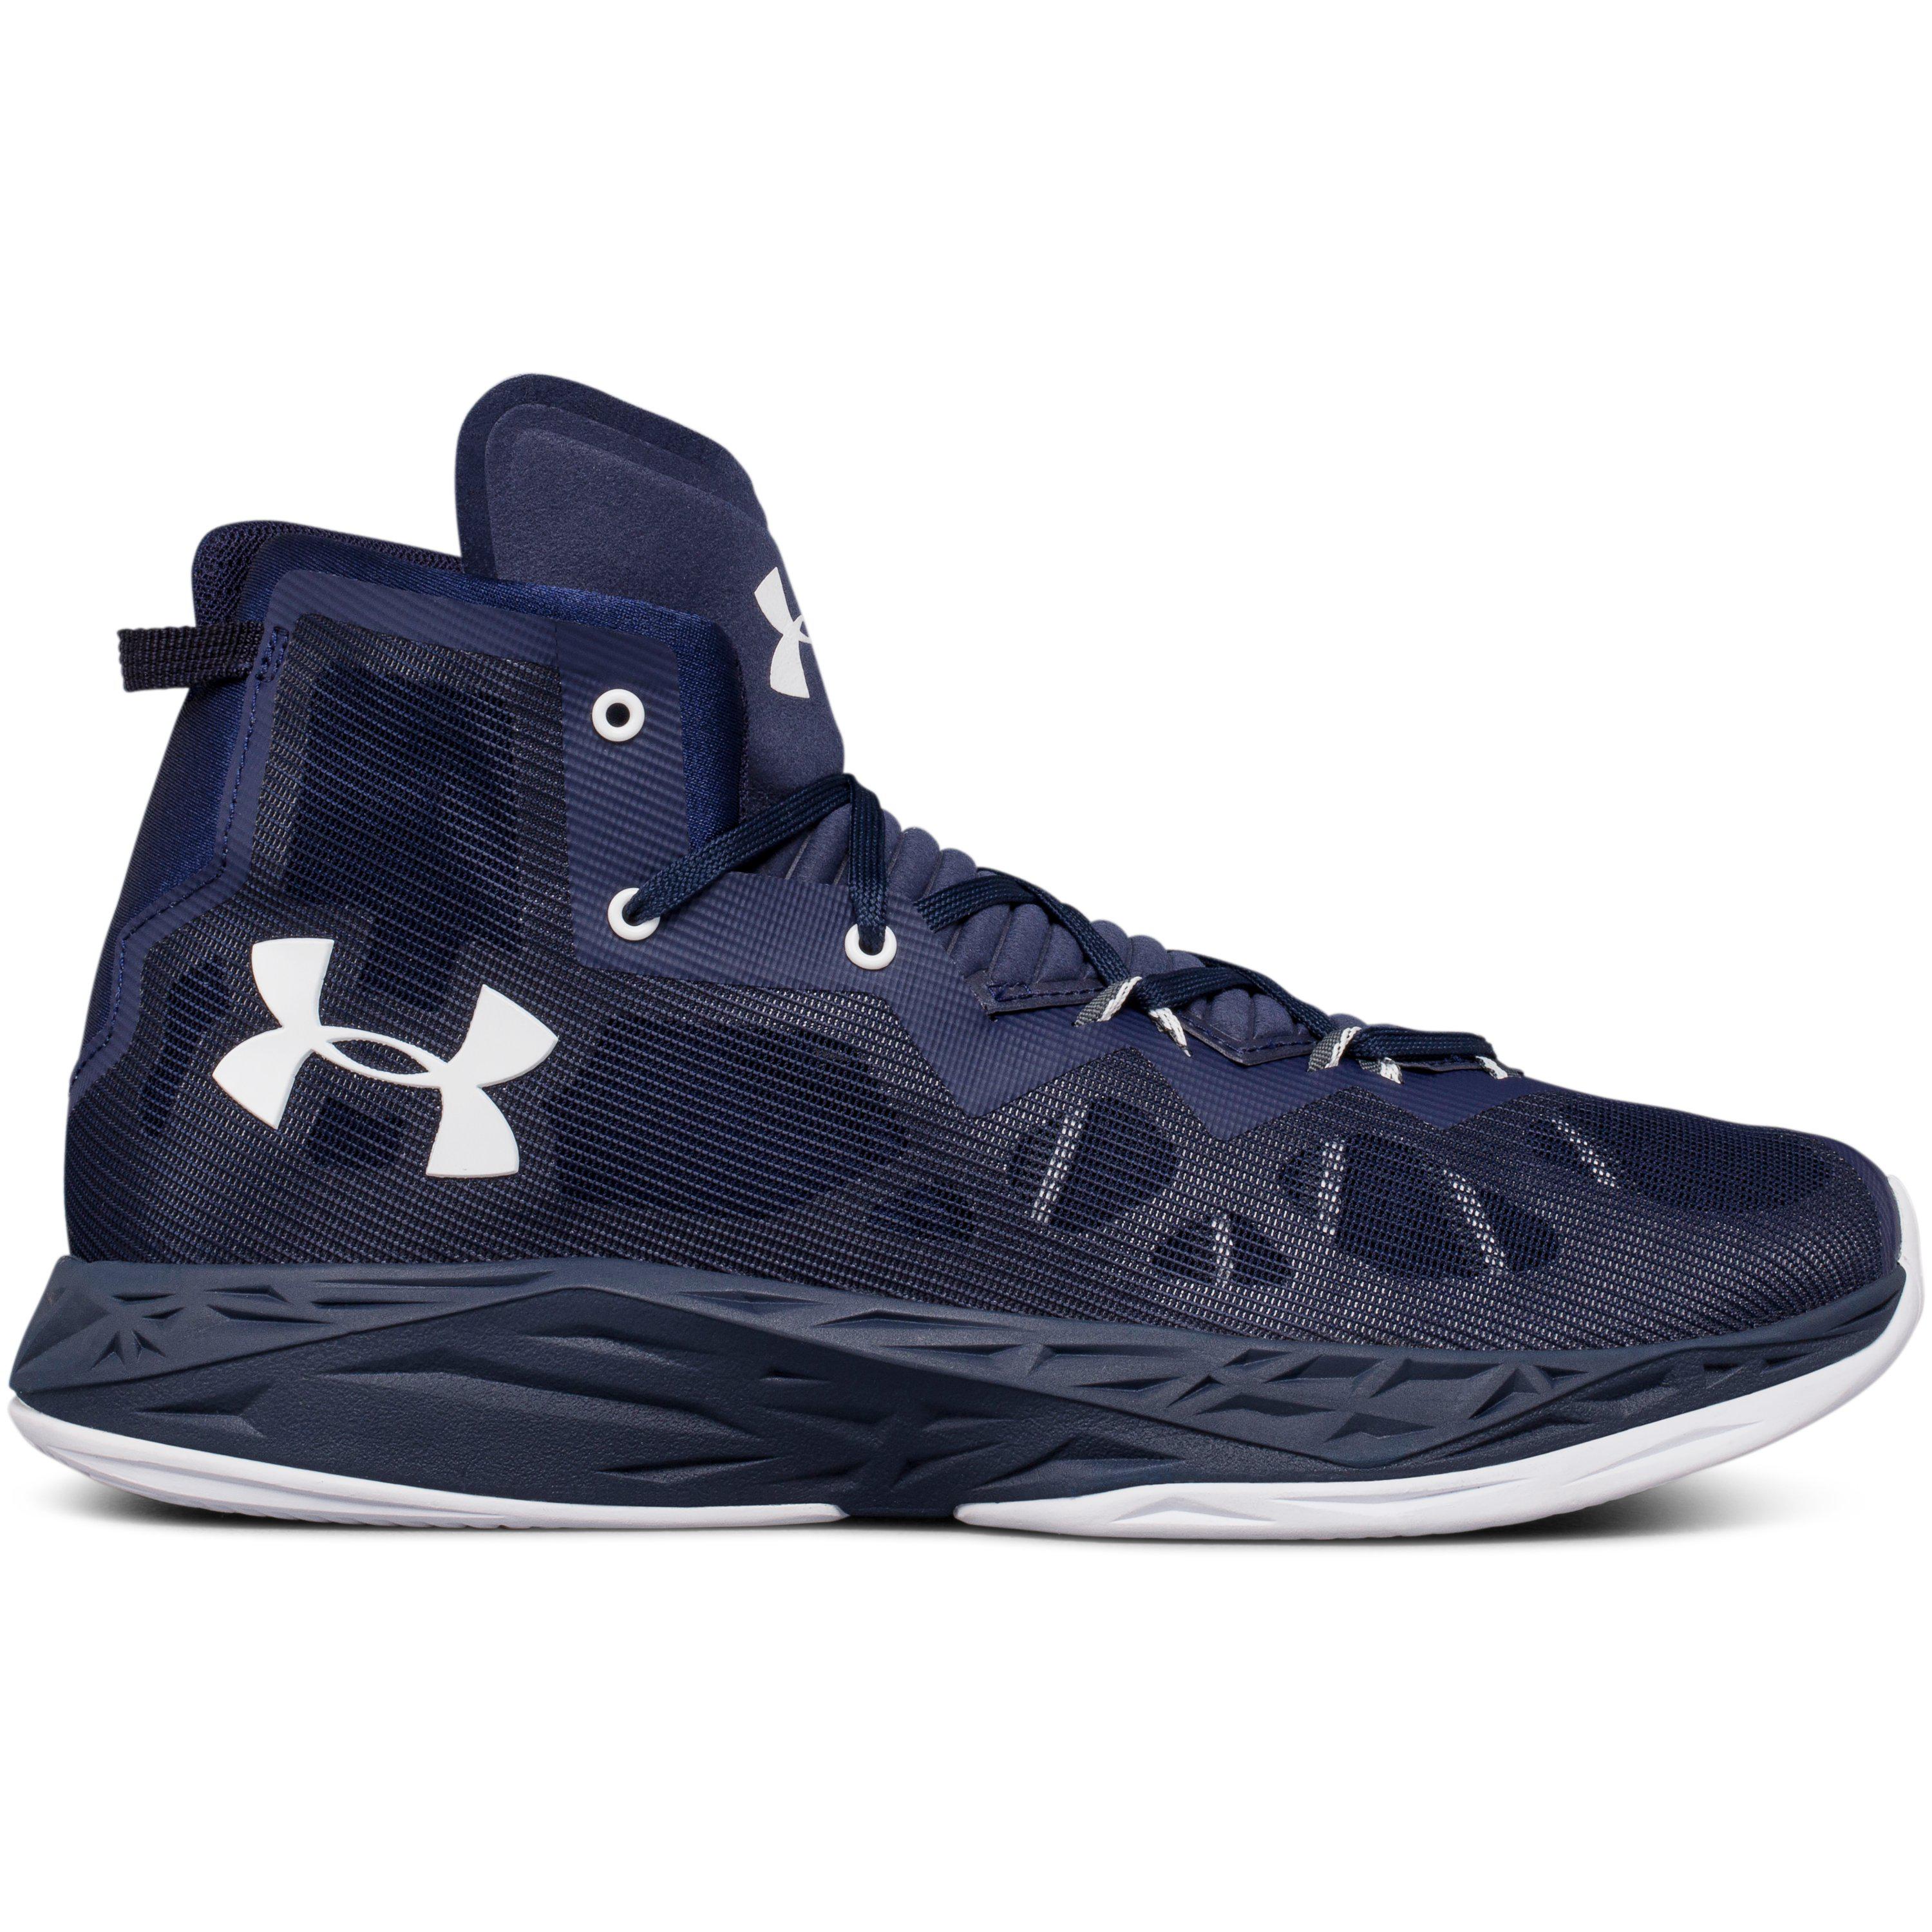 Under Armour Men's Ua Lightning 4 Basketball Shoes in Midnight Navy ...